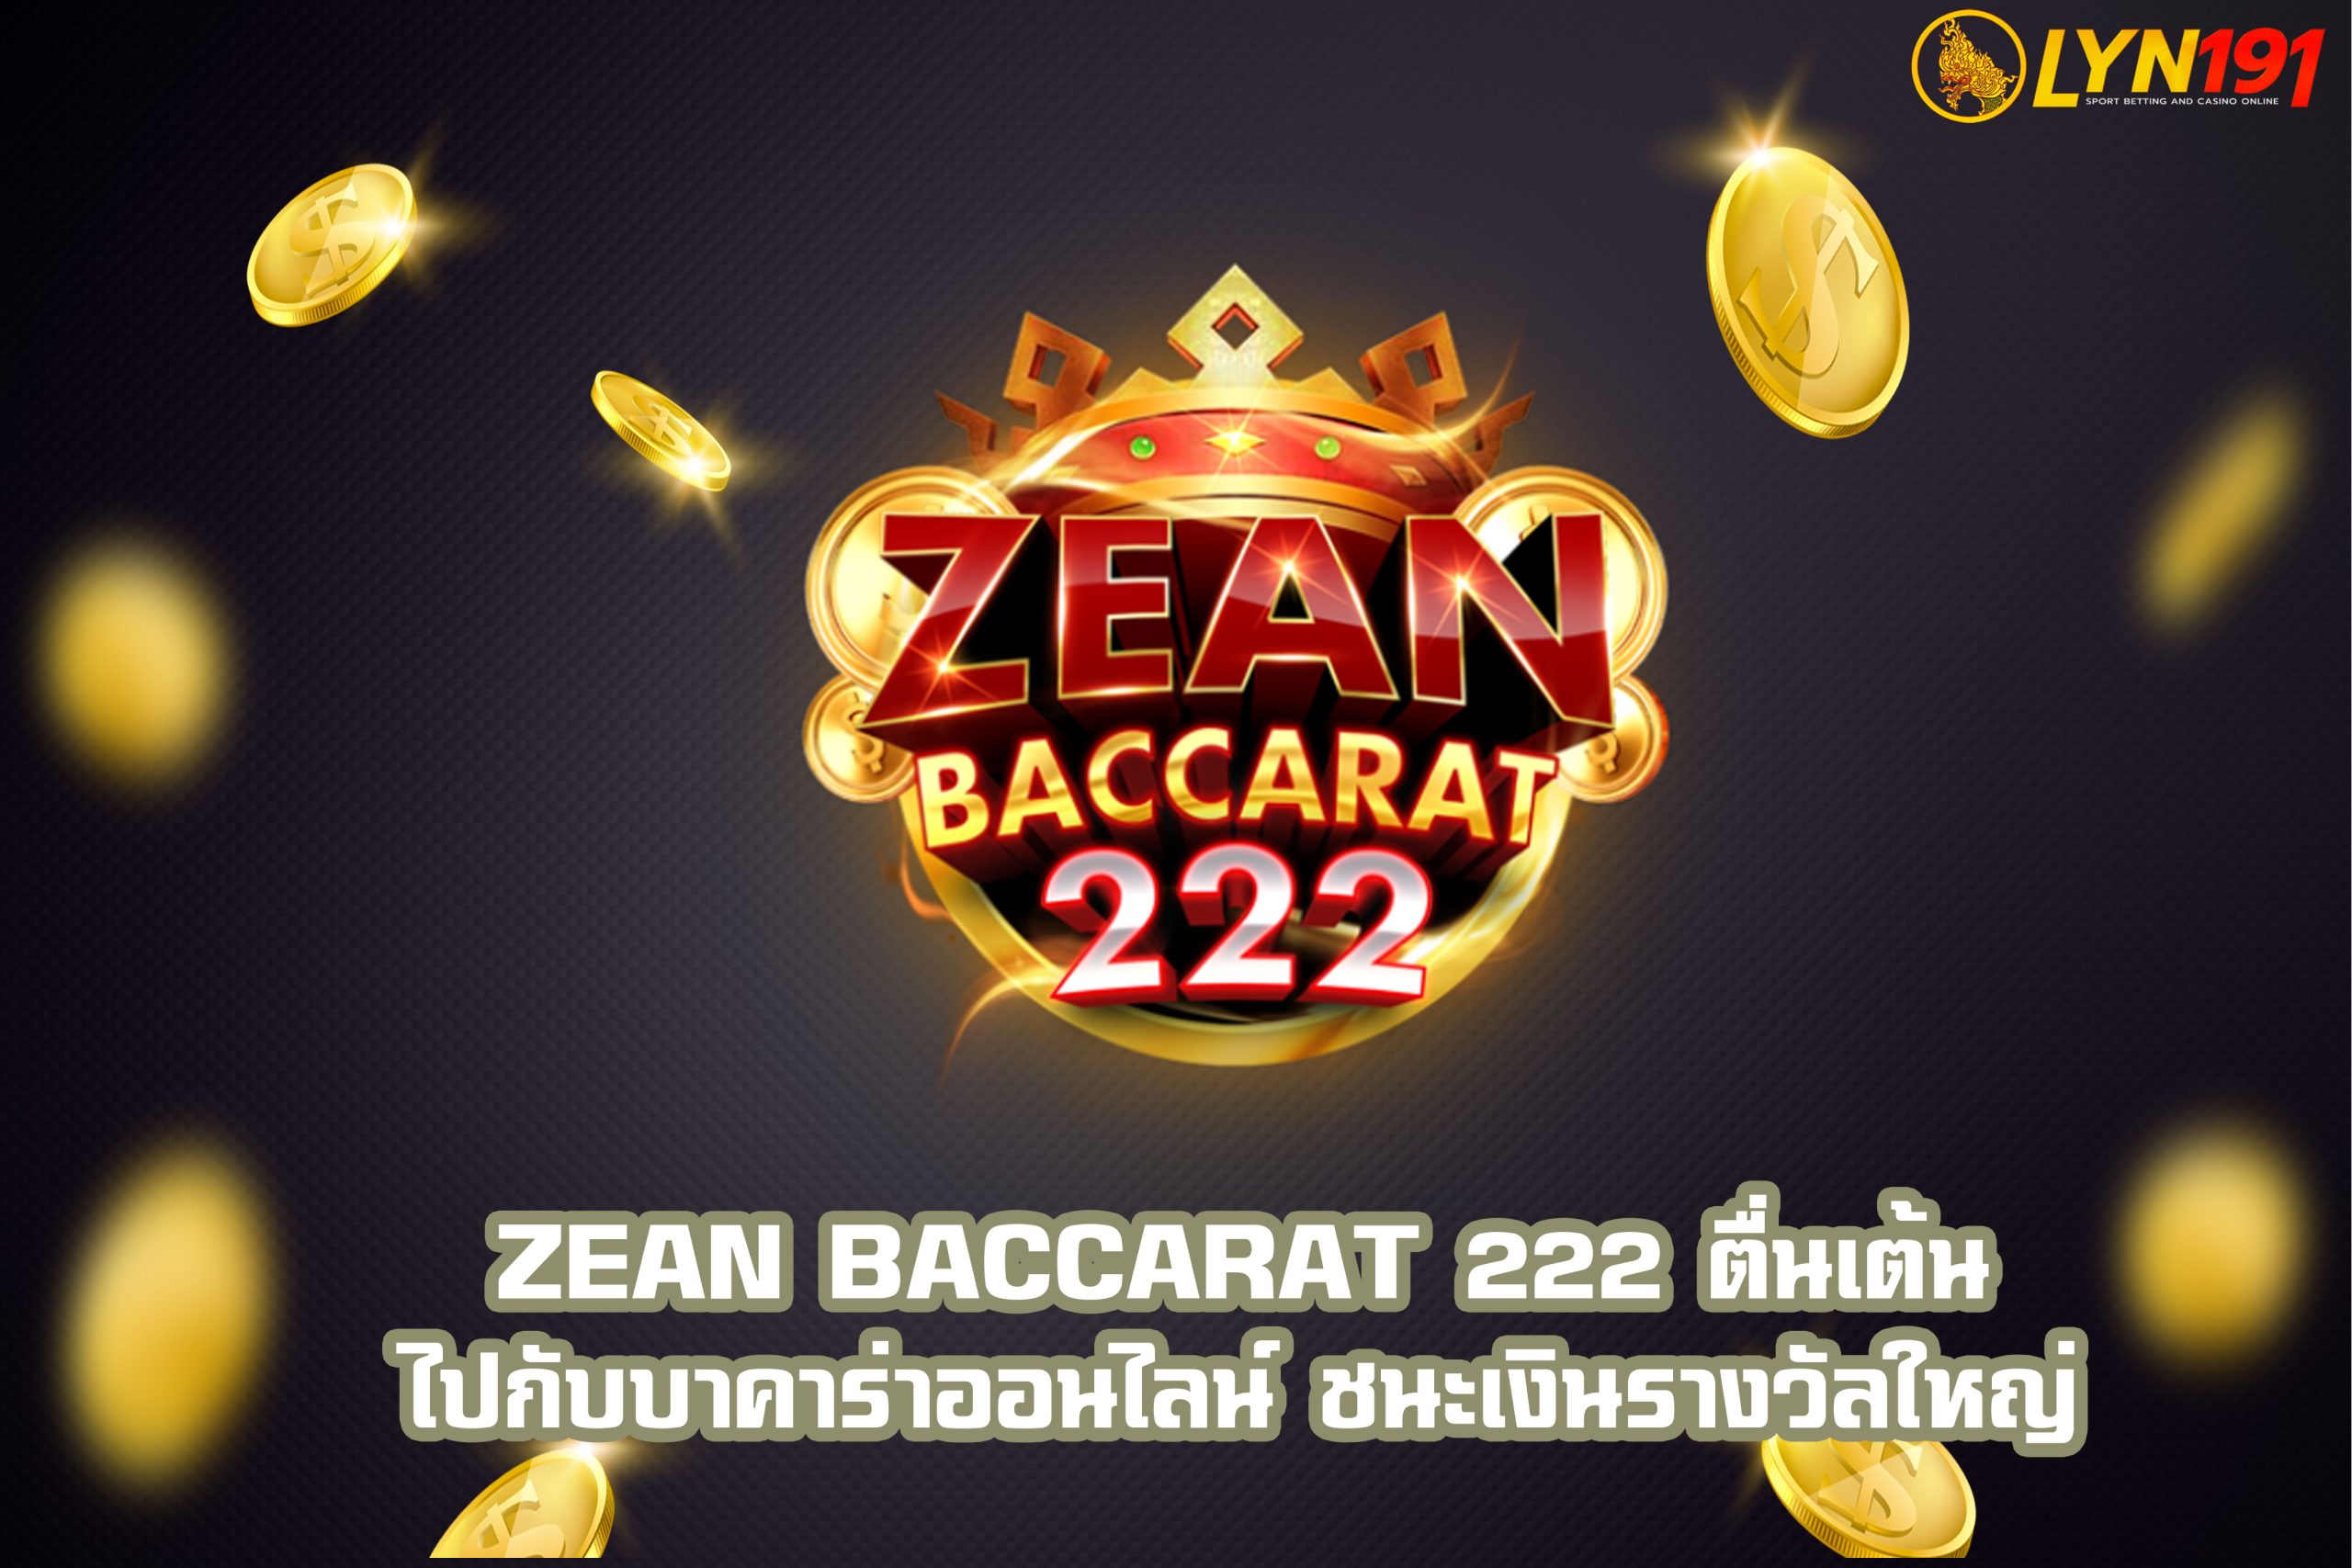 ZEAN baccarat 222